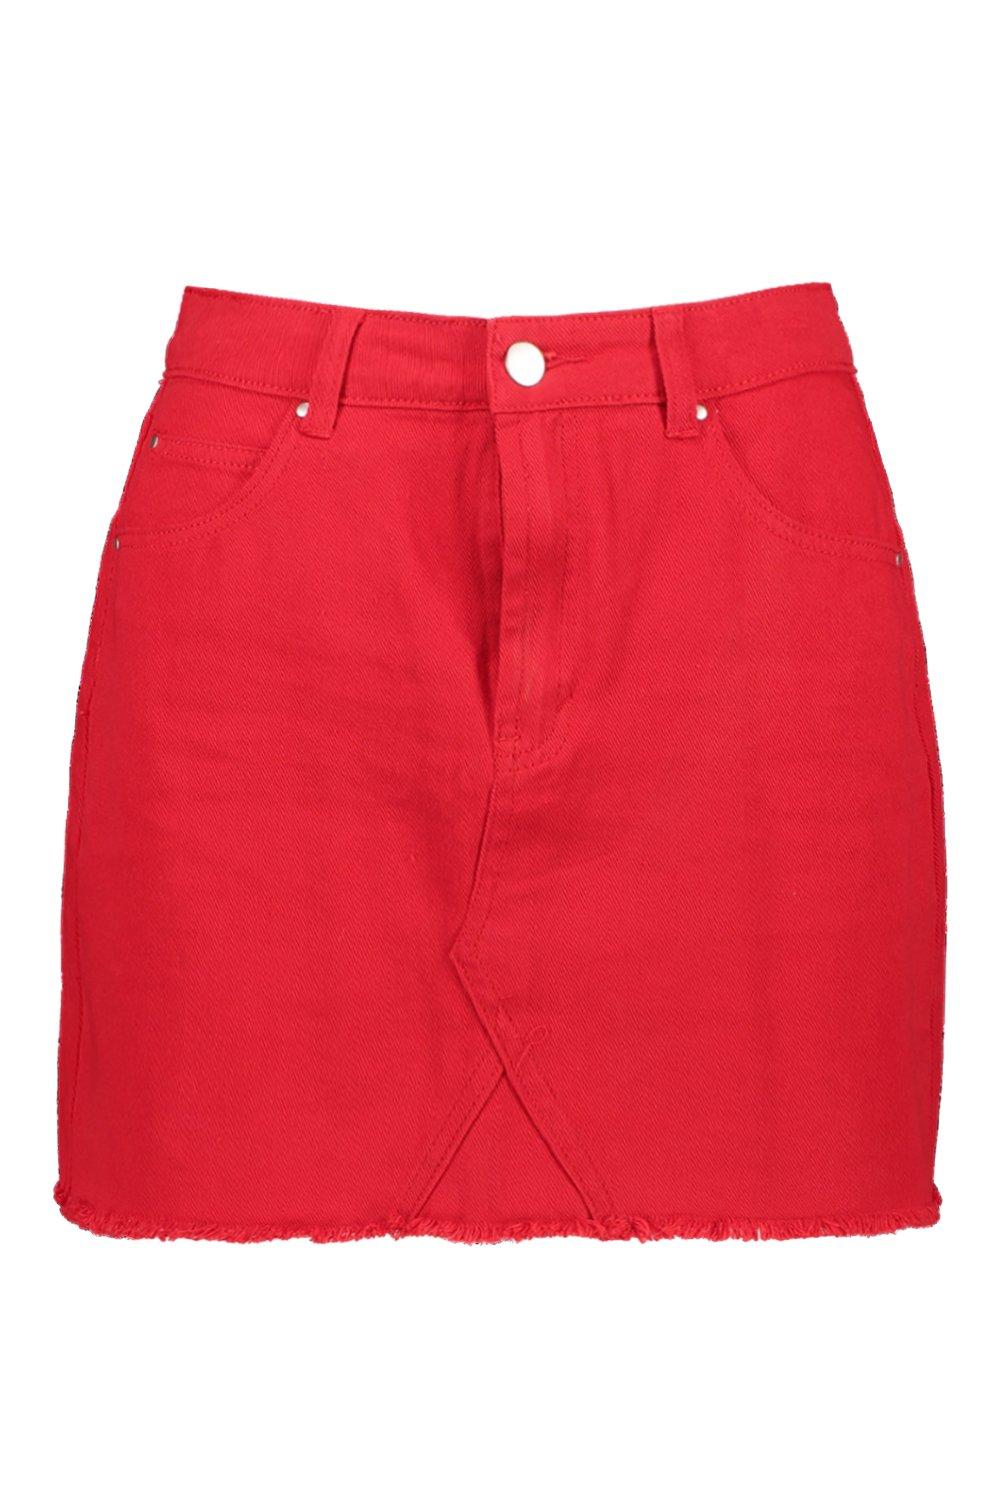 red jean skirt